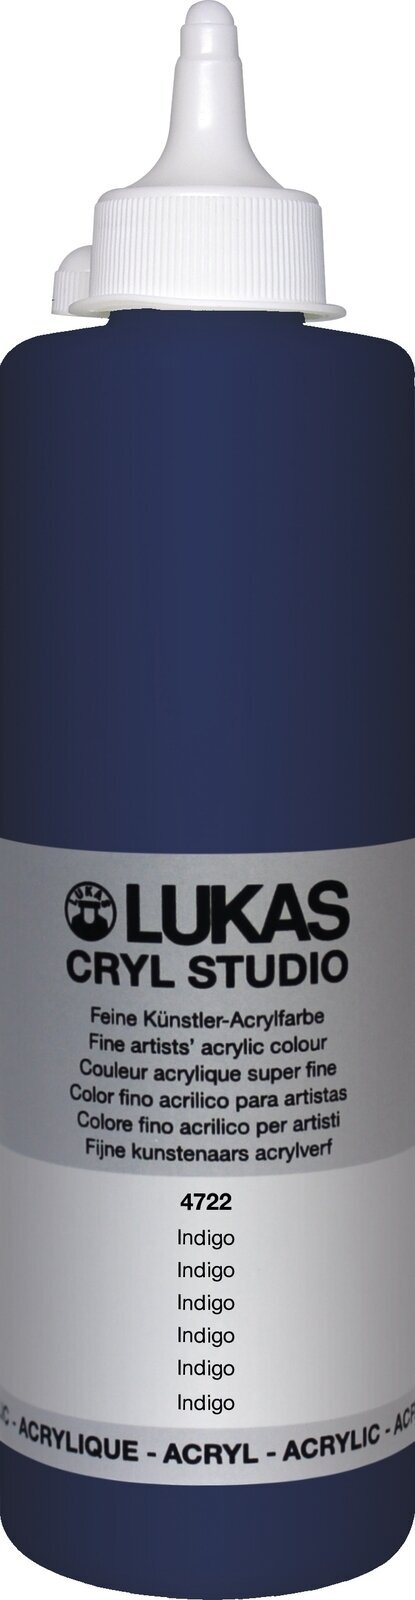 Acrylfarbe Lukas Cryl Studio Acrylic Paint Plastic Bottle Acrylfarbe Indigo 500 ml 1 Stck